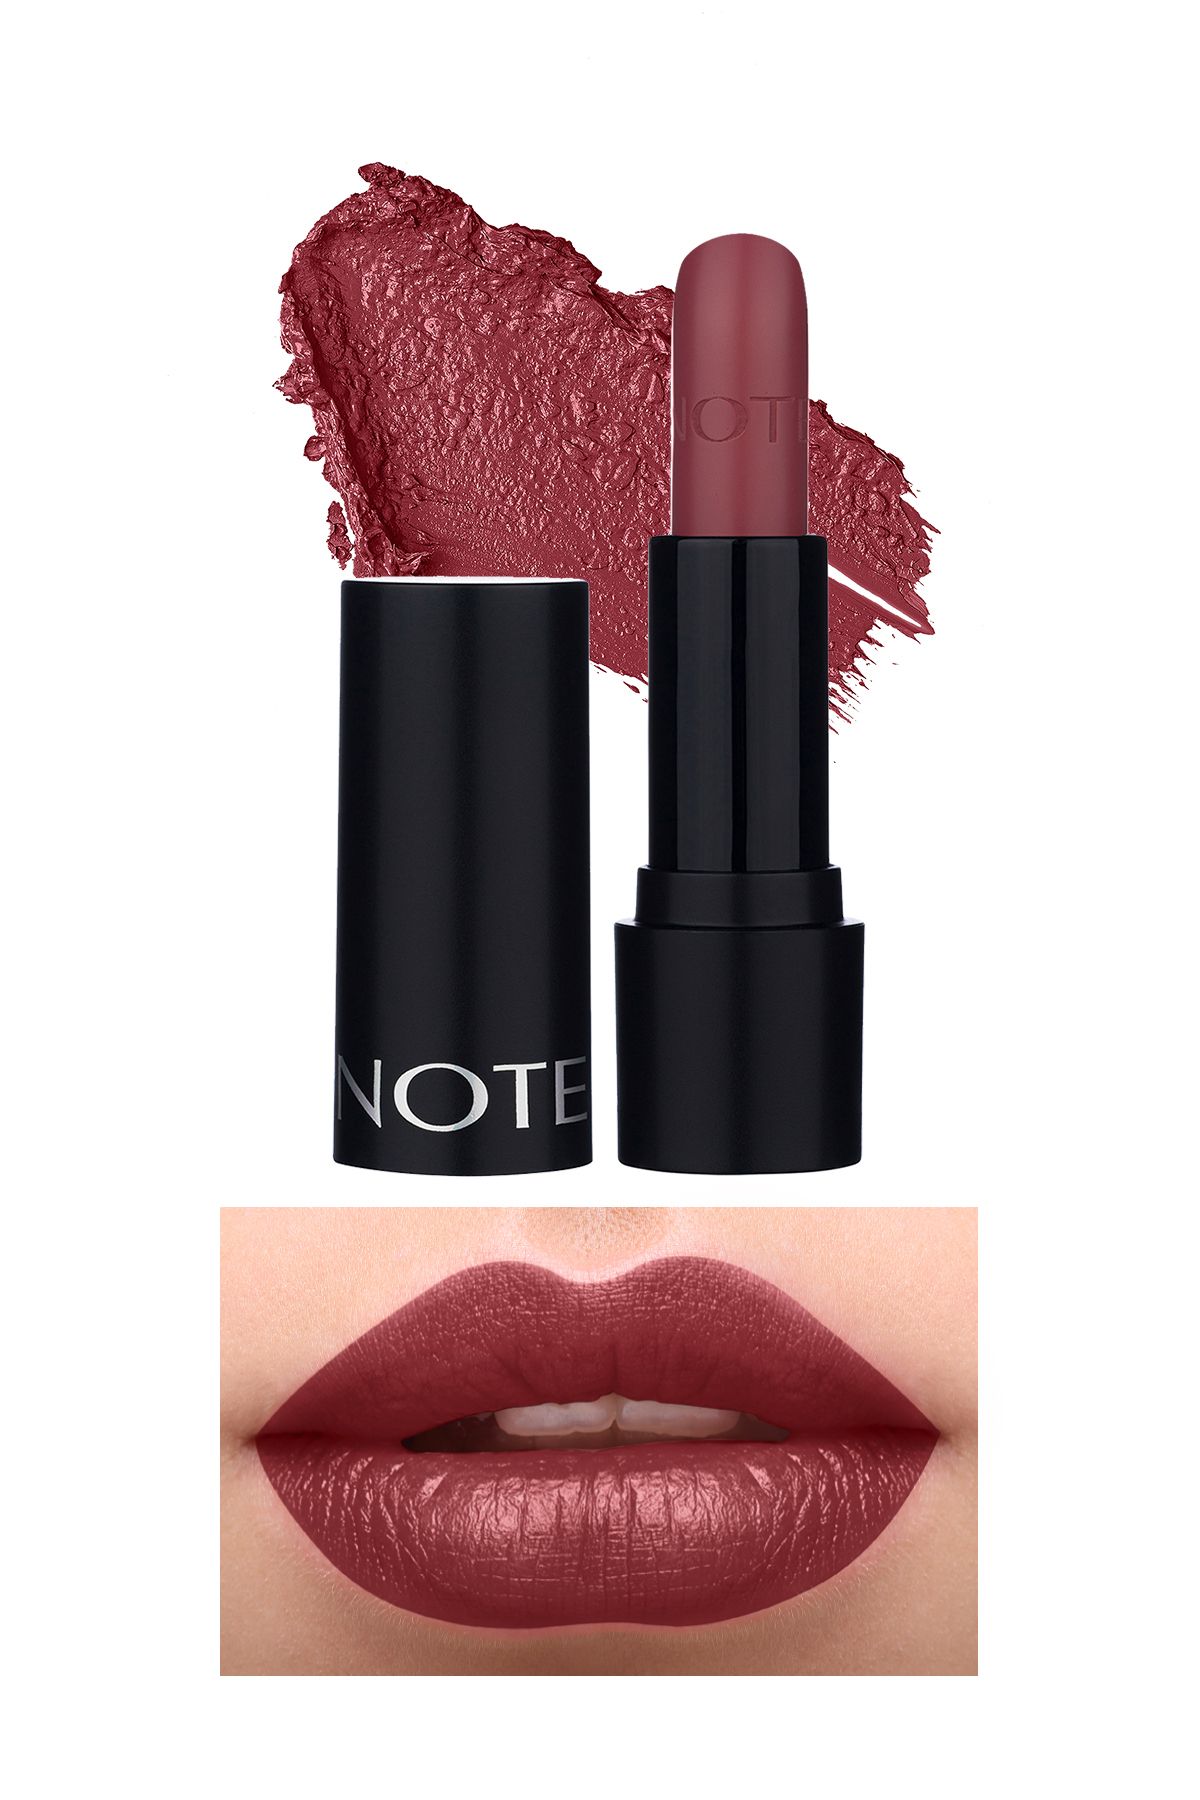 Note Cosmetics Deep Impact Lipstick Kremsi Dokulu Yarı Parlak Ruj 08 Sophisticate Burgundy - Kırmızı